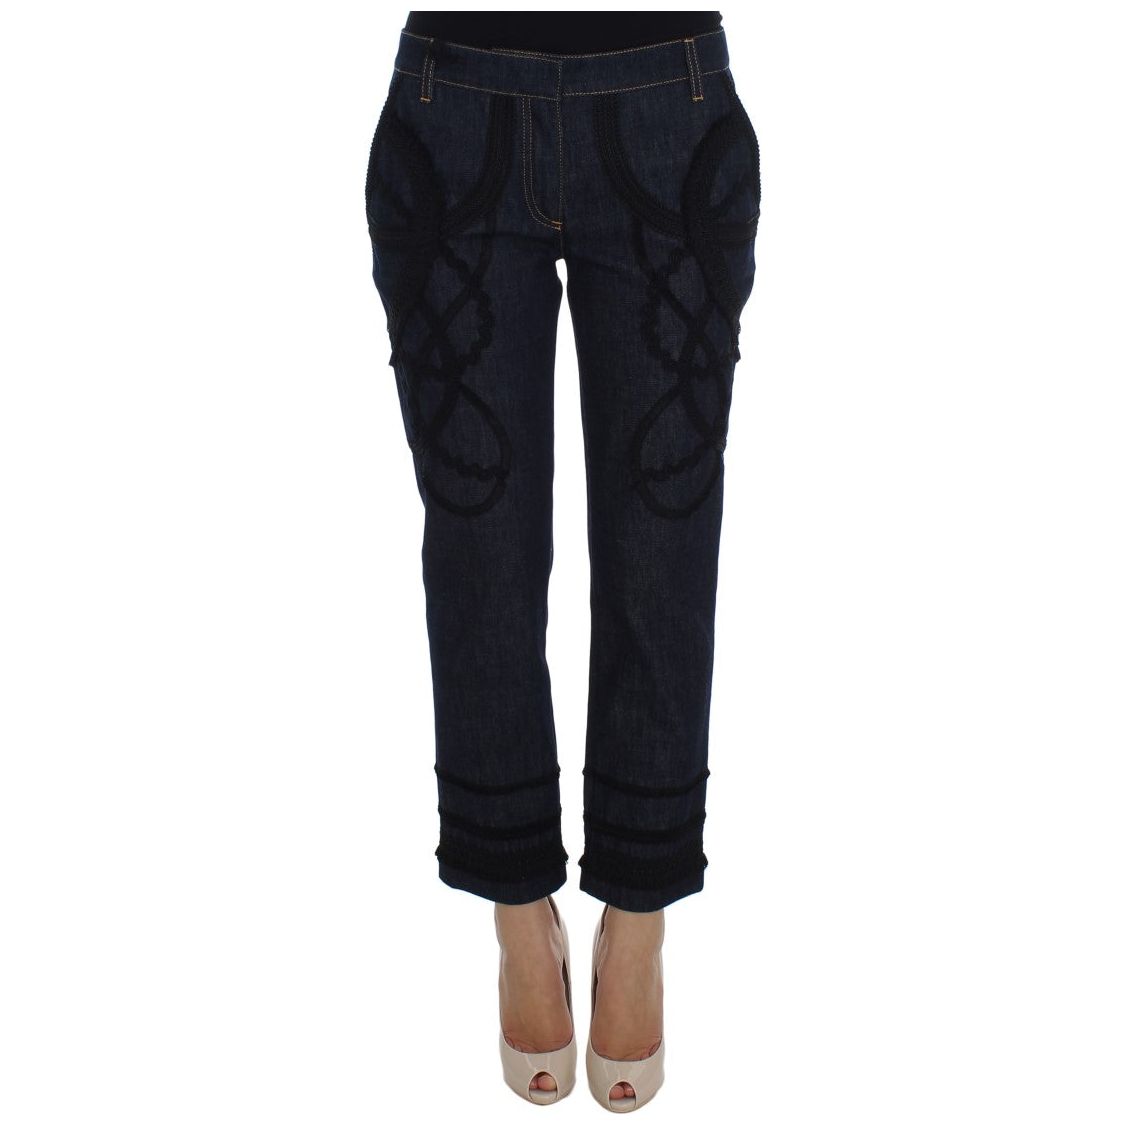 Dolce & Gabbana Embroidered Capri Jeans for Elegant Styling blue-denim-cotton-capri-torero-jeans 64487-blue-denim-cotton-capri-torero-jeans.jpg